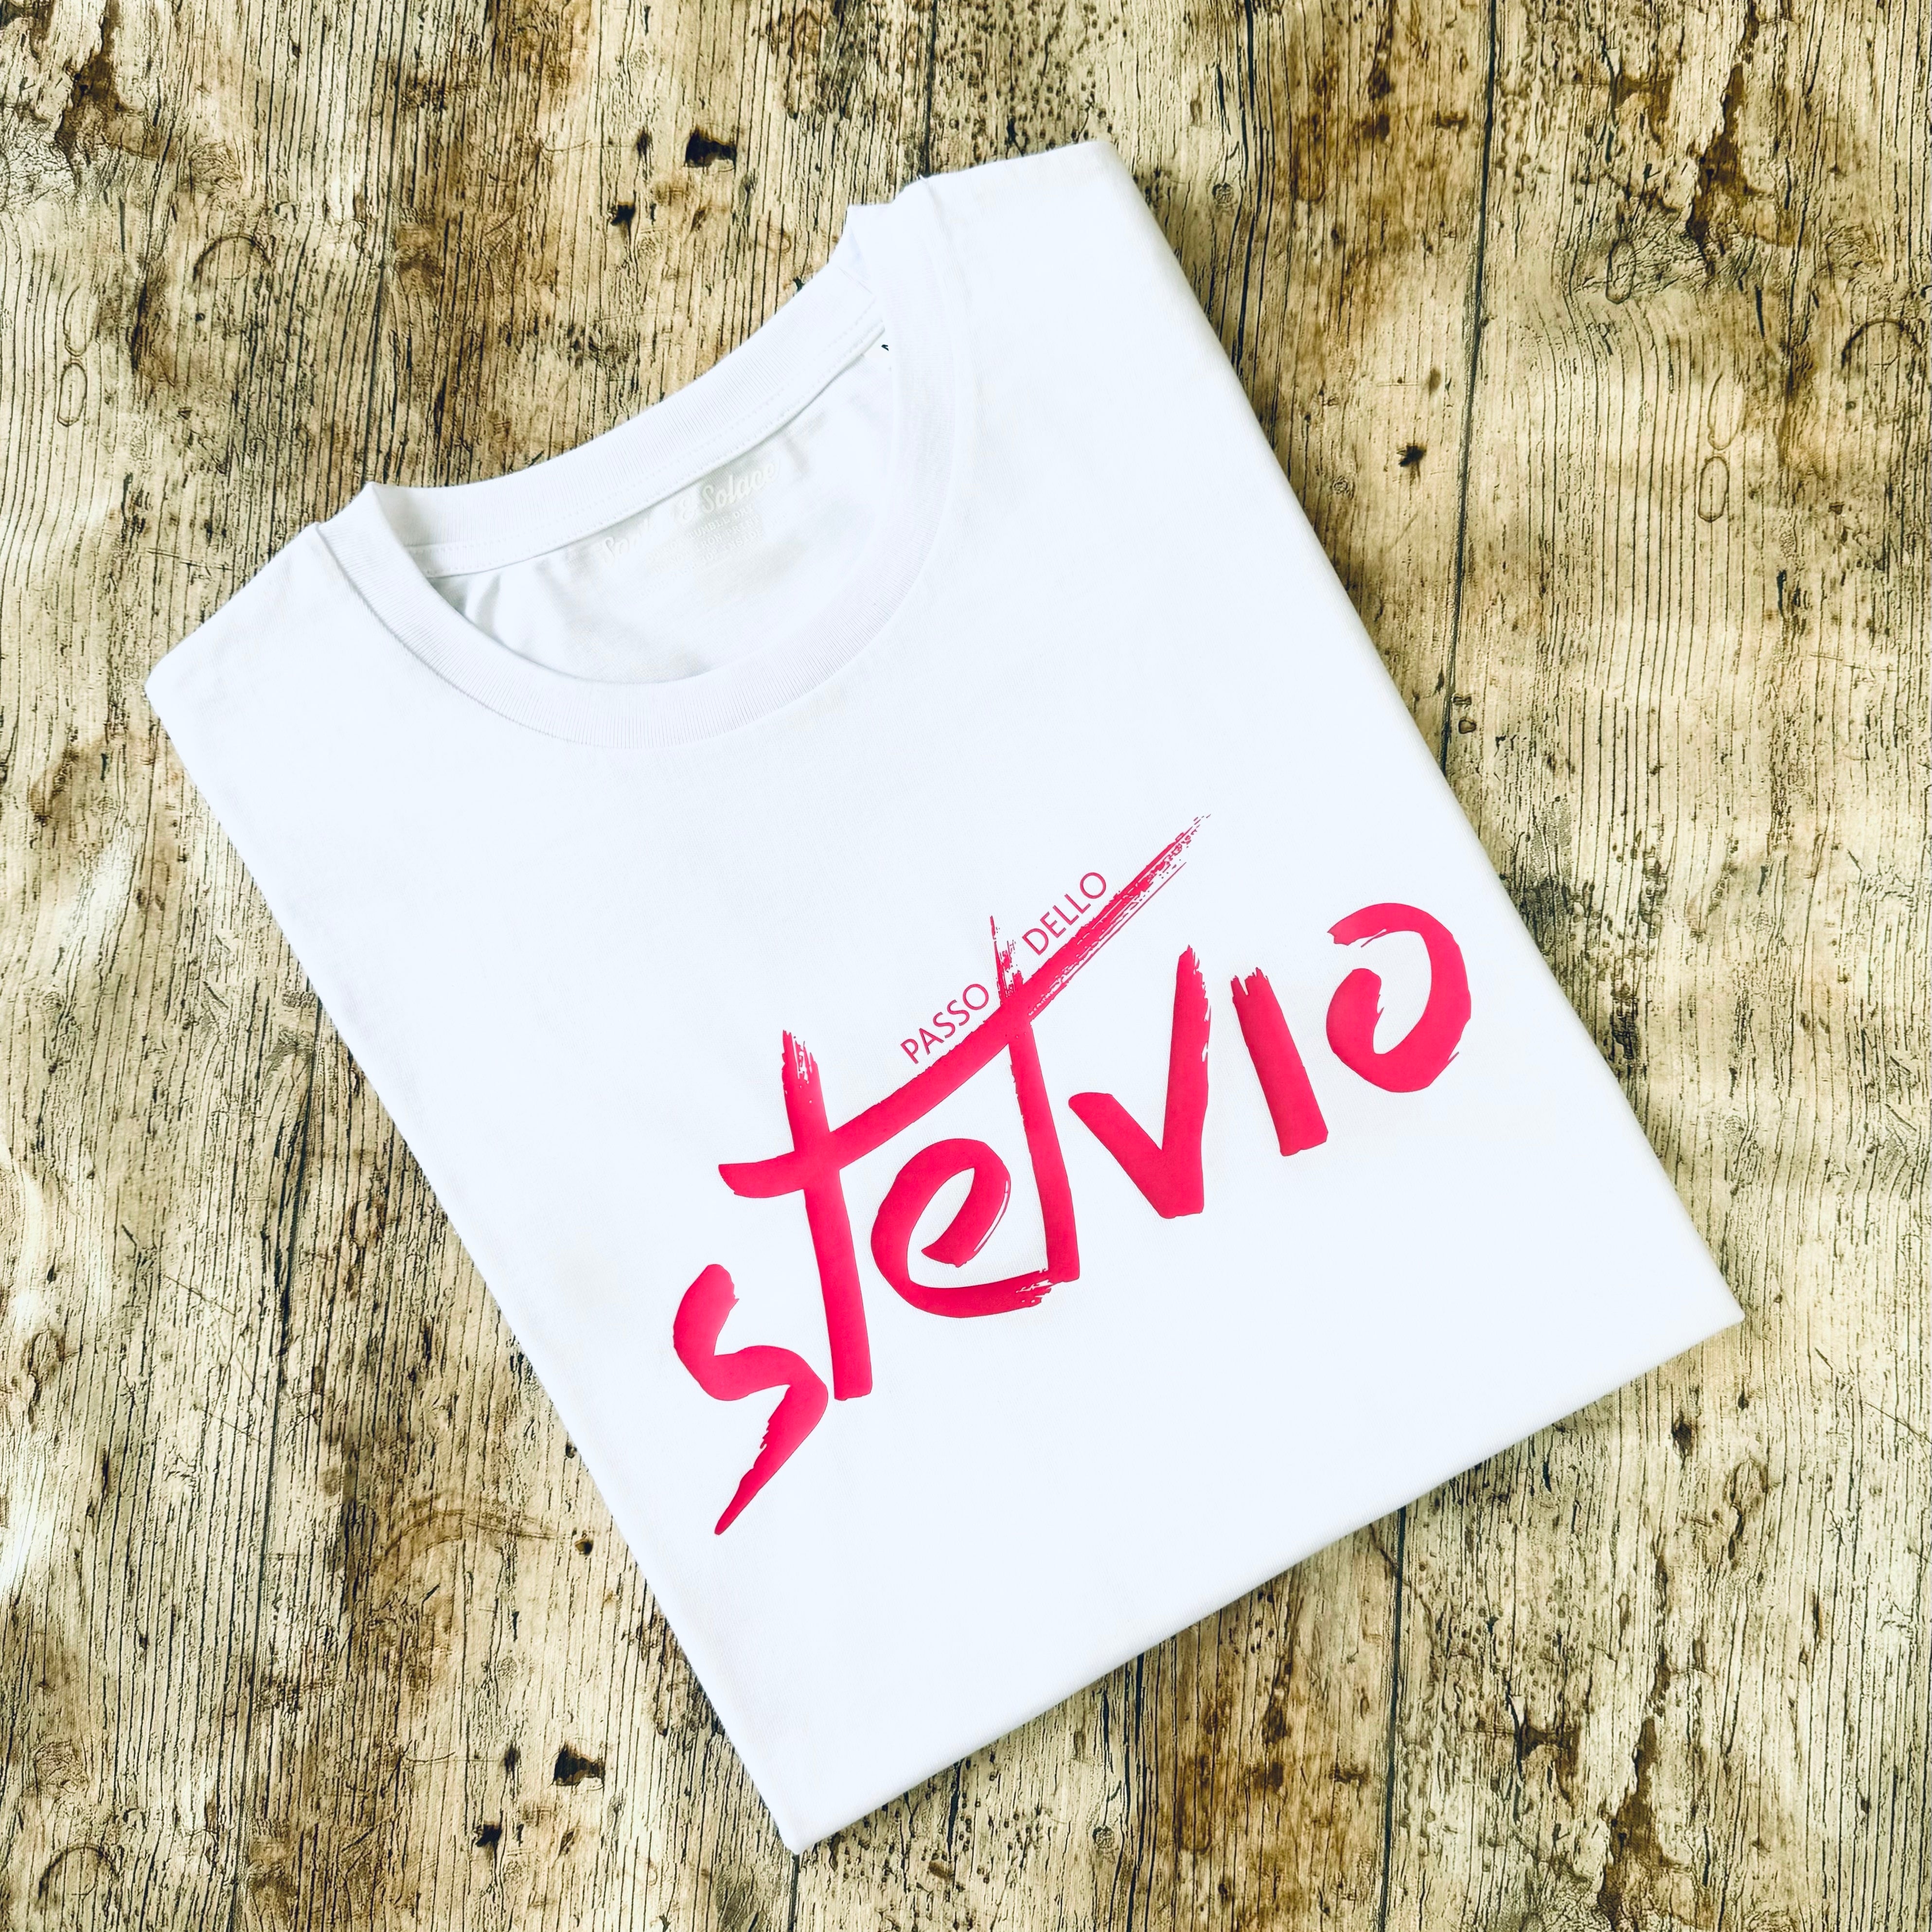 Stelvio T-shirt